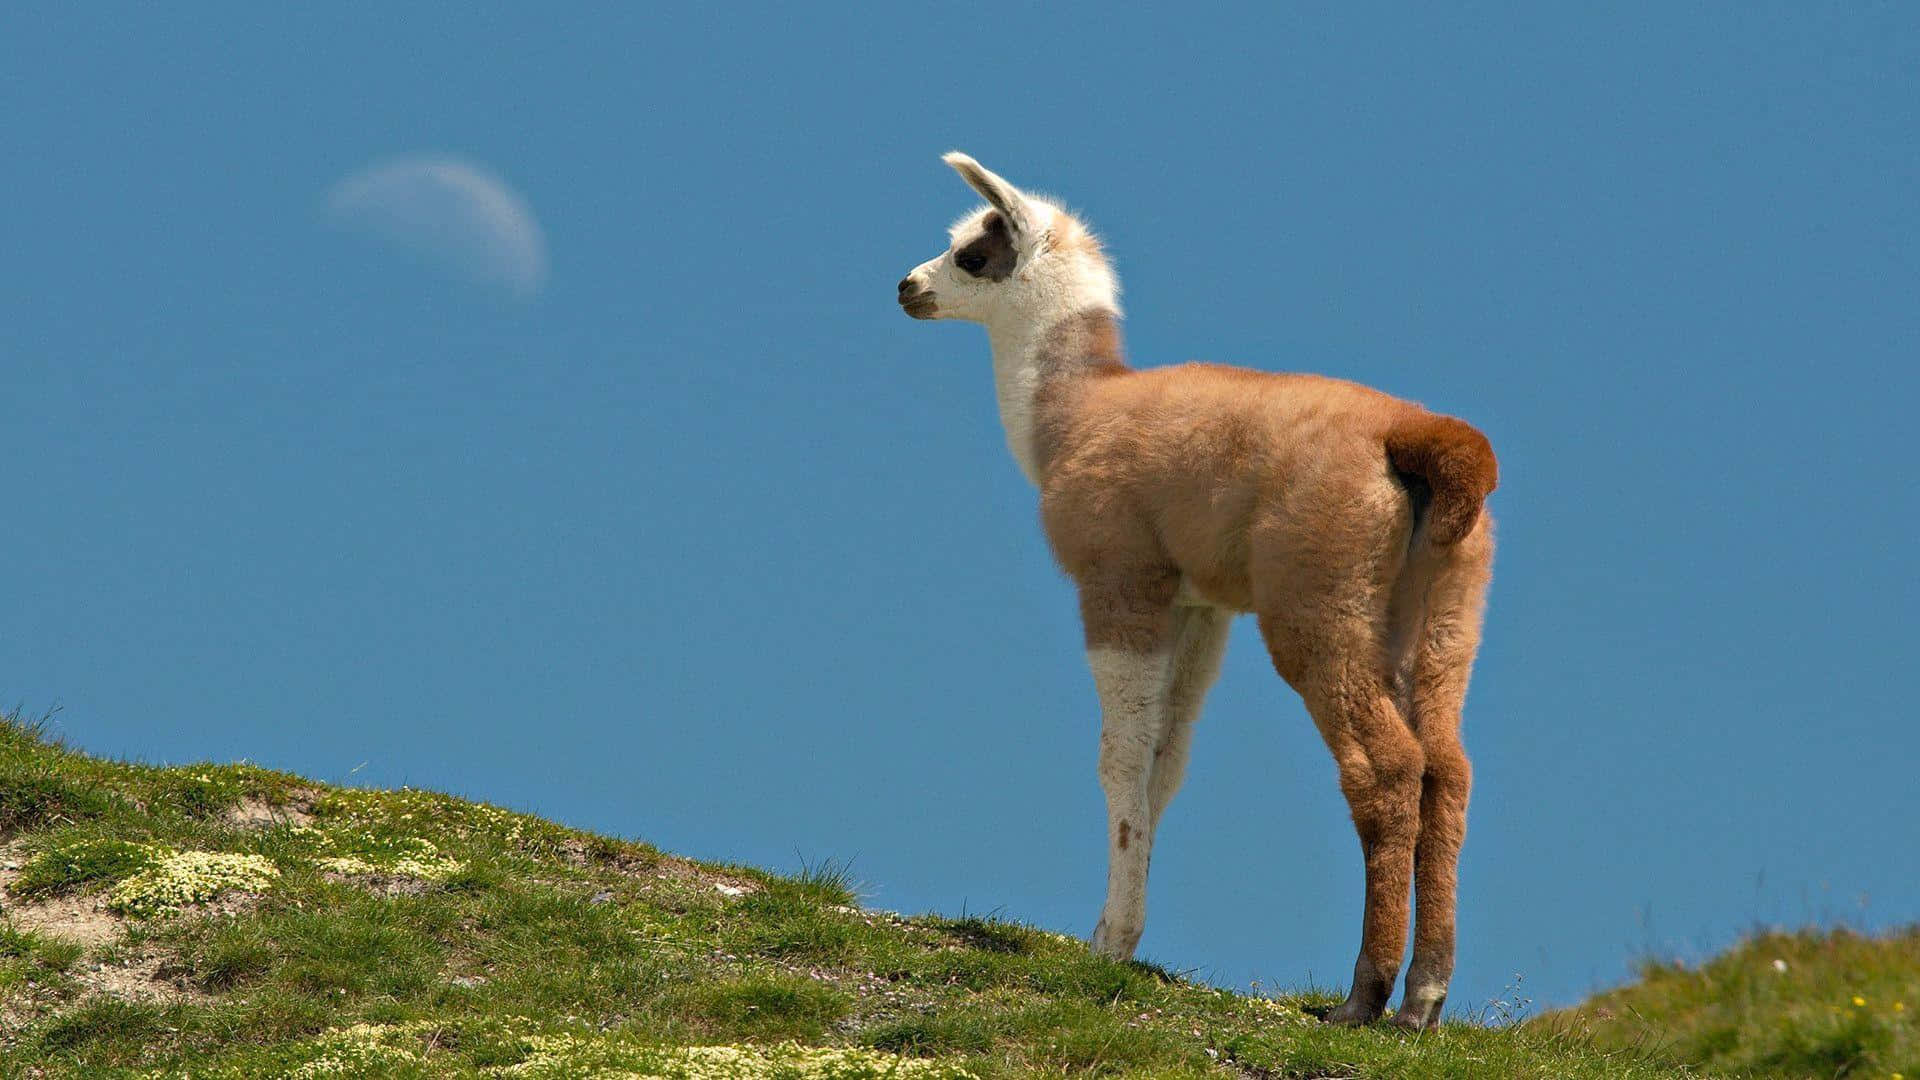 Llama Gazing Into Distance Wallpaper